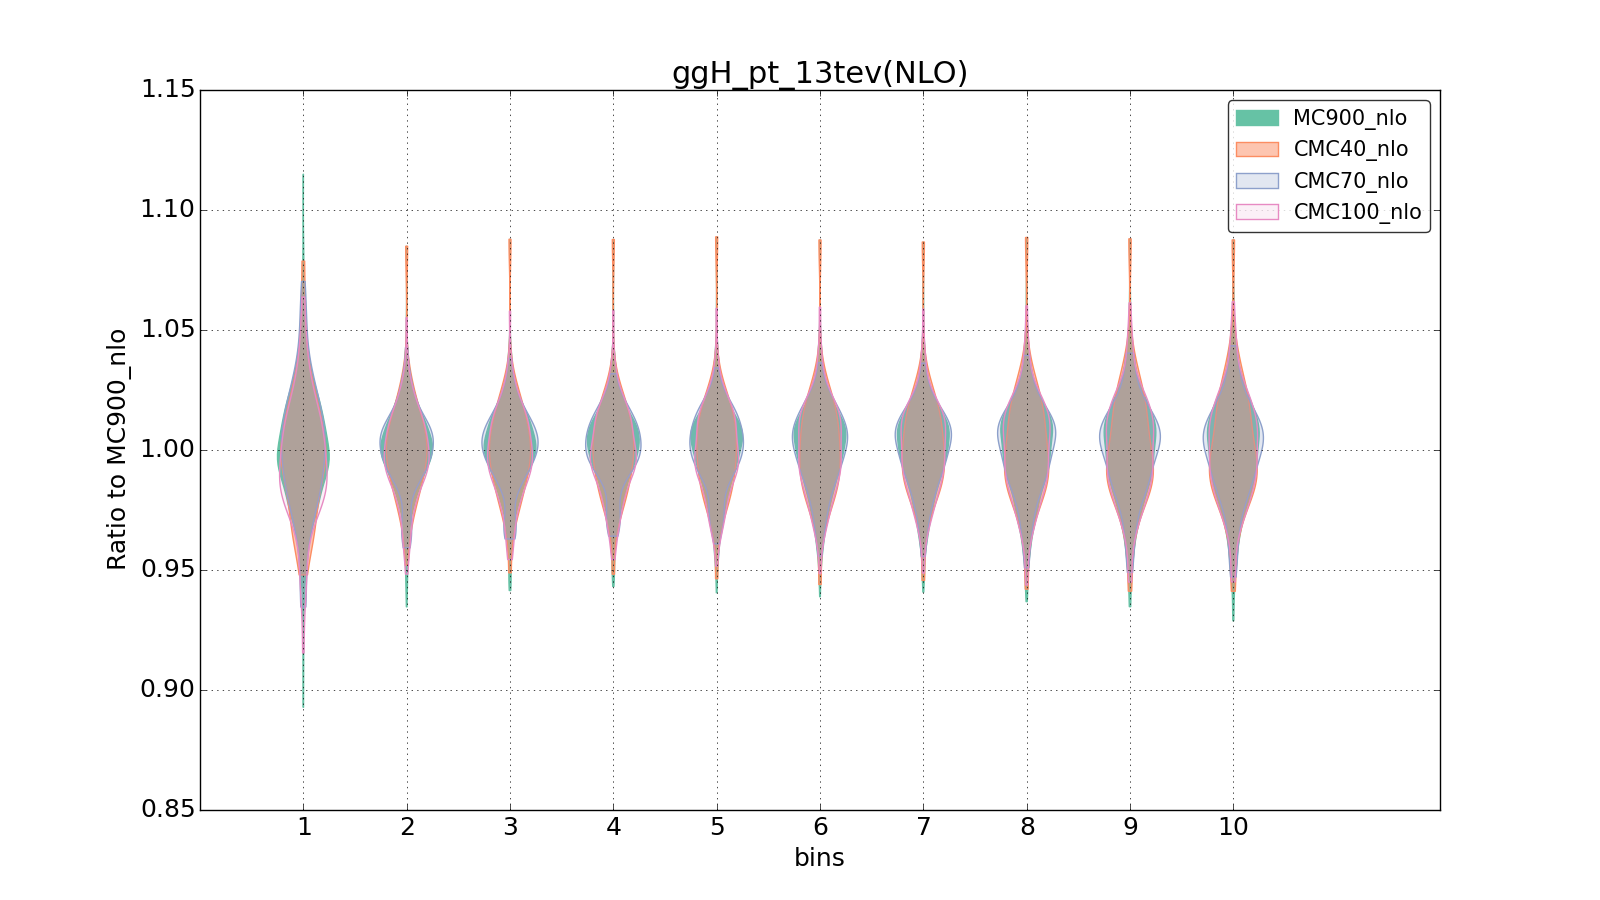 figure plots/CMCpheno/group_1_violinplot_ggH_pt_13tev(NLO).png